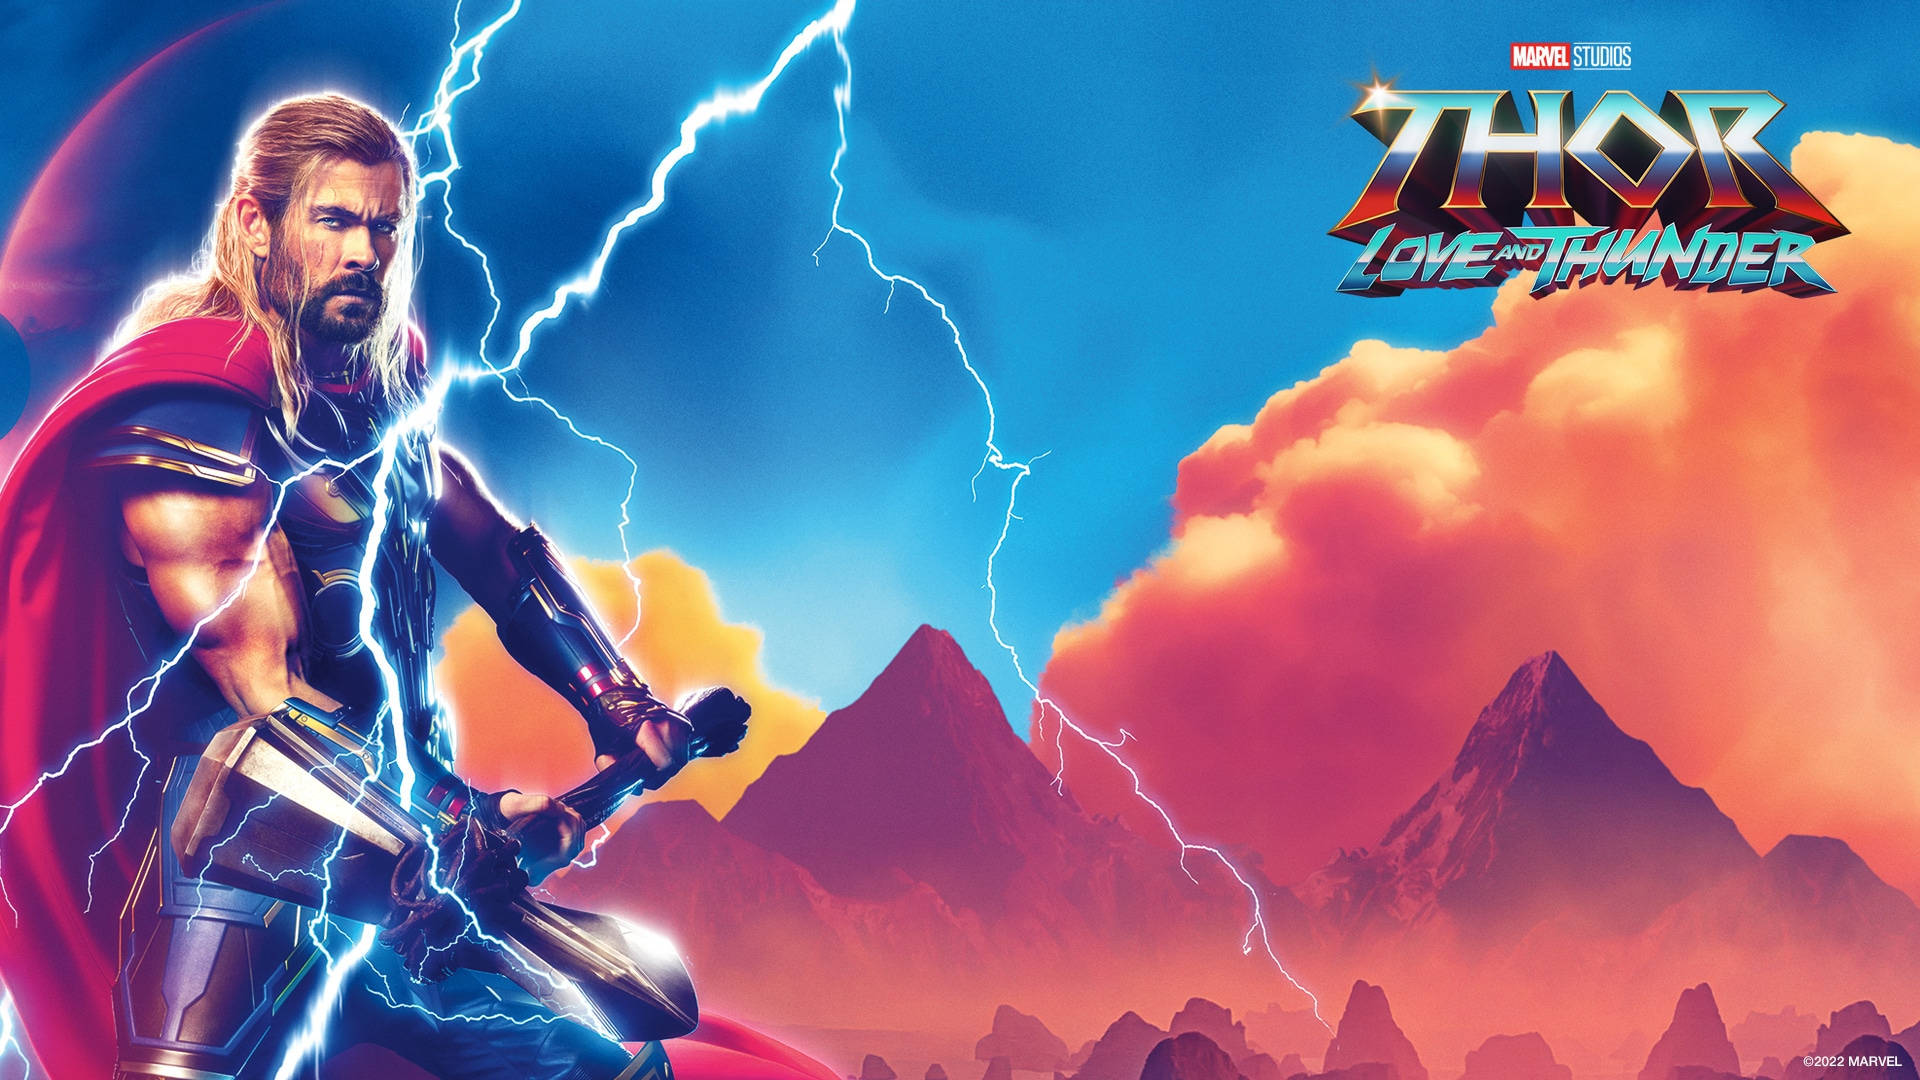 Thor Superhero Movie Digital Poster Background